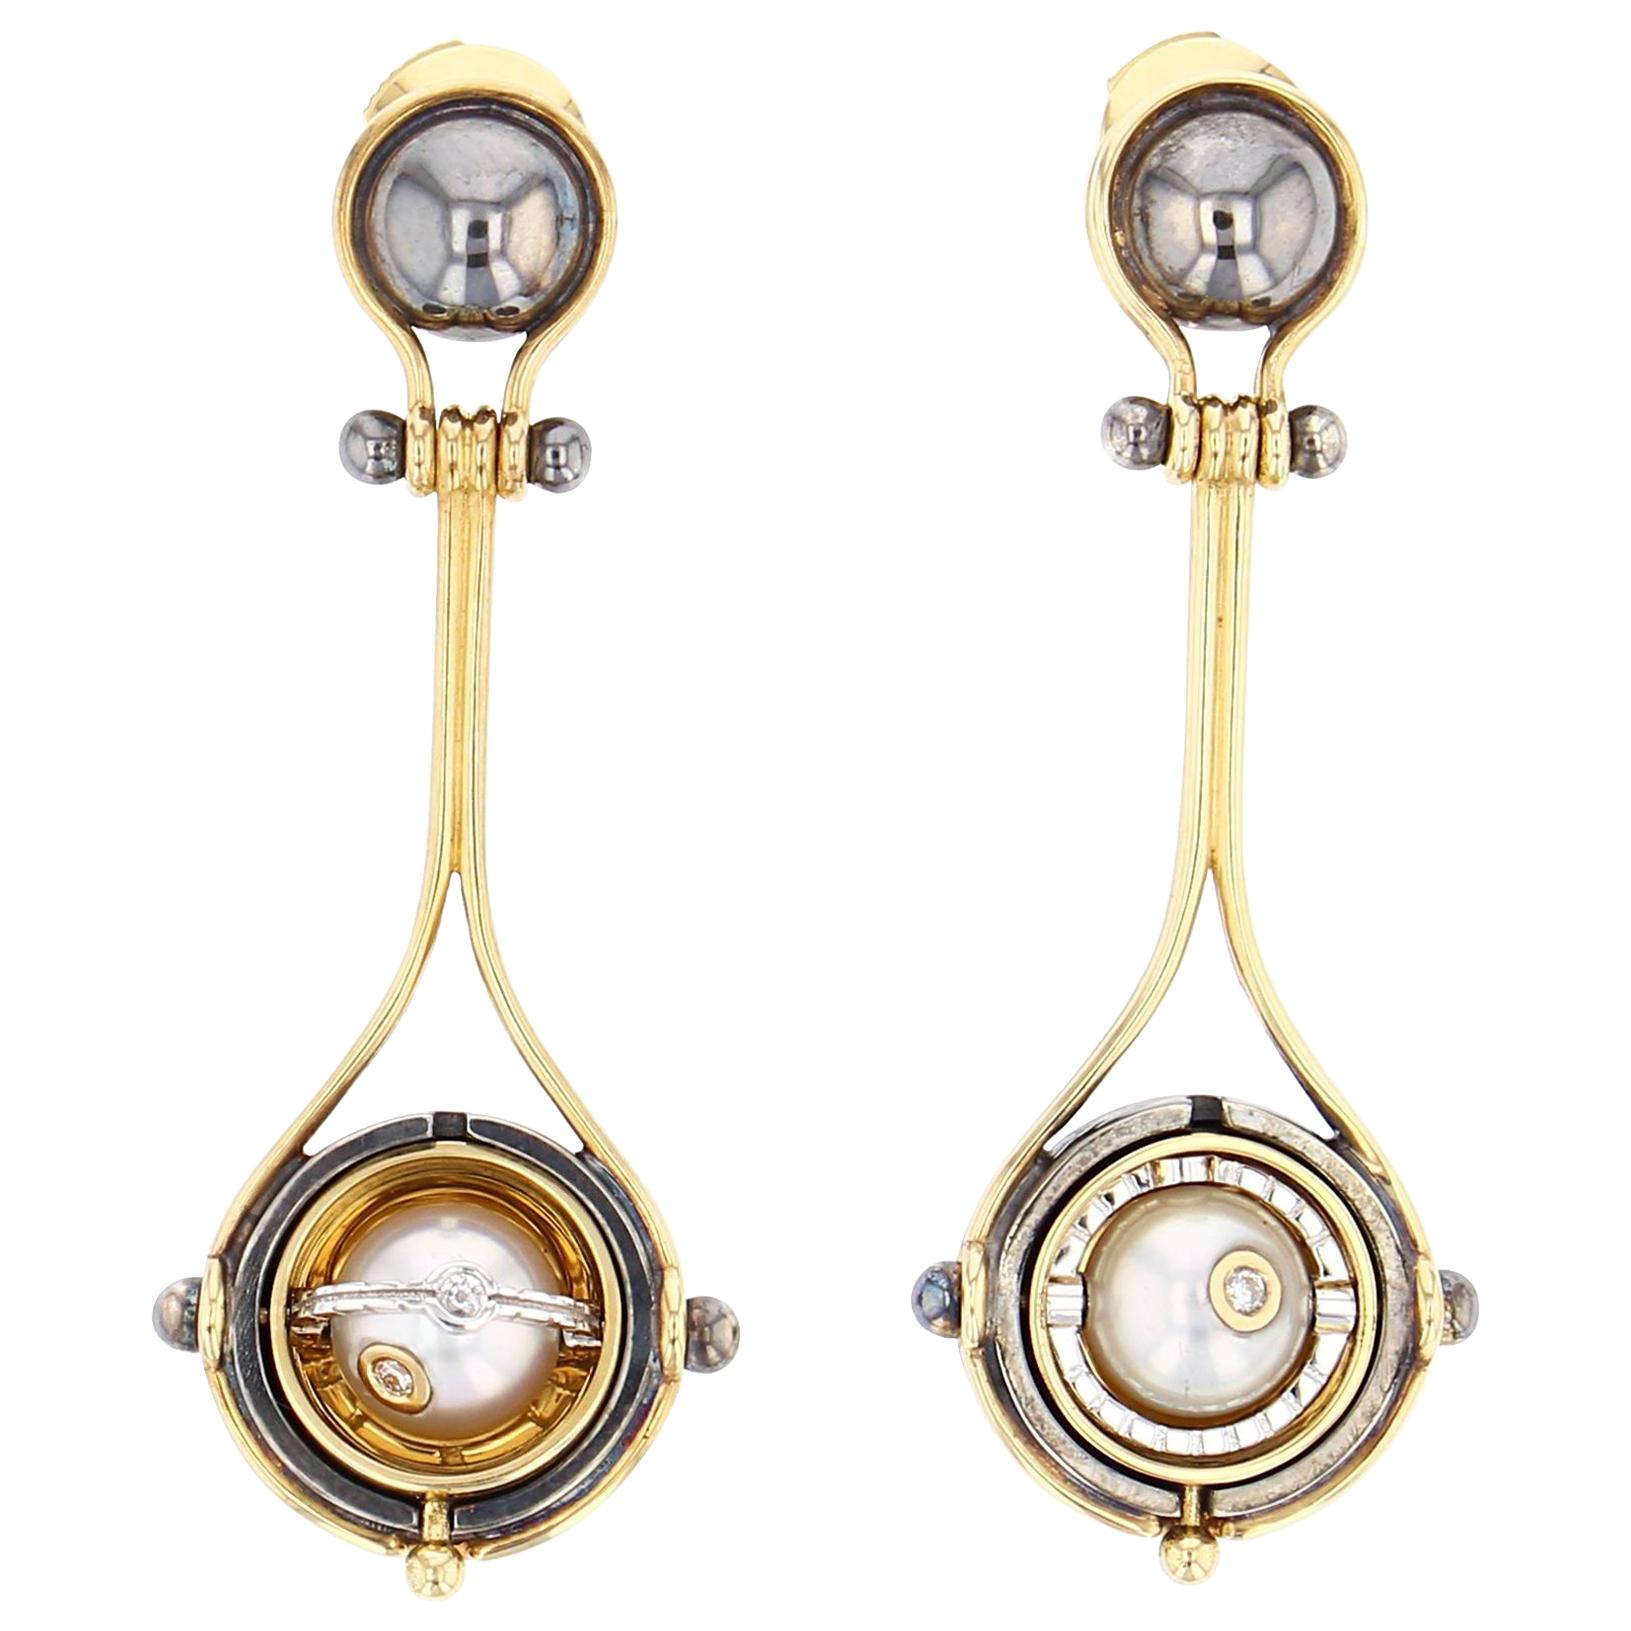 Diamonds Akoya Pearls Pluton Long Earrings in 18k yellow gold by Elie Top